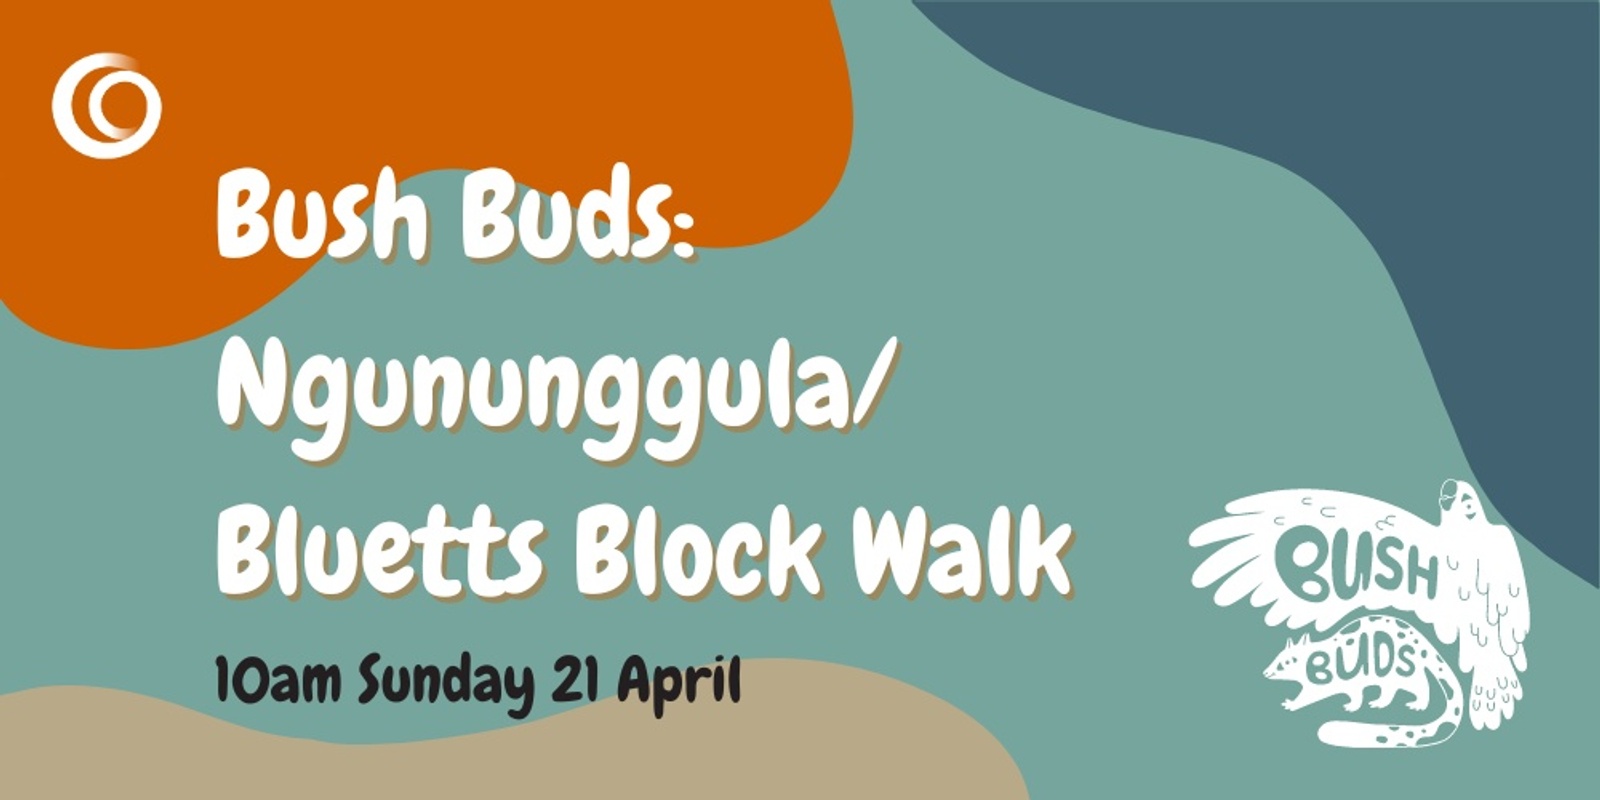 Banner image for Ngununggula / Bluetts Block Bush Buds Walk